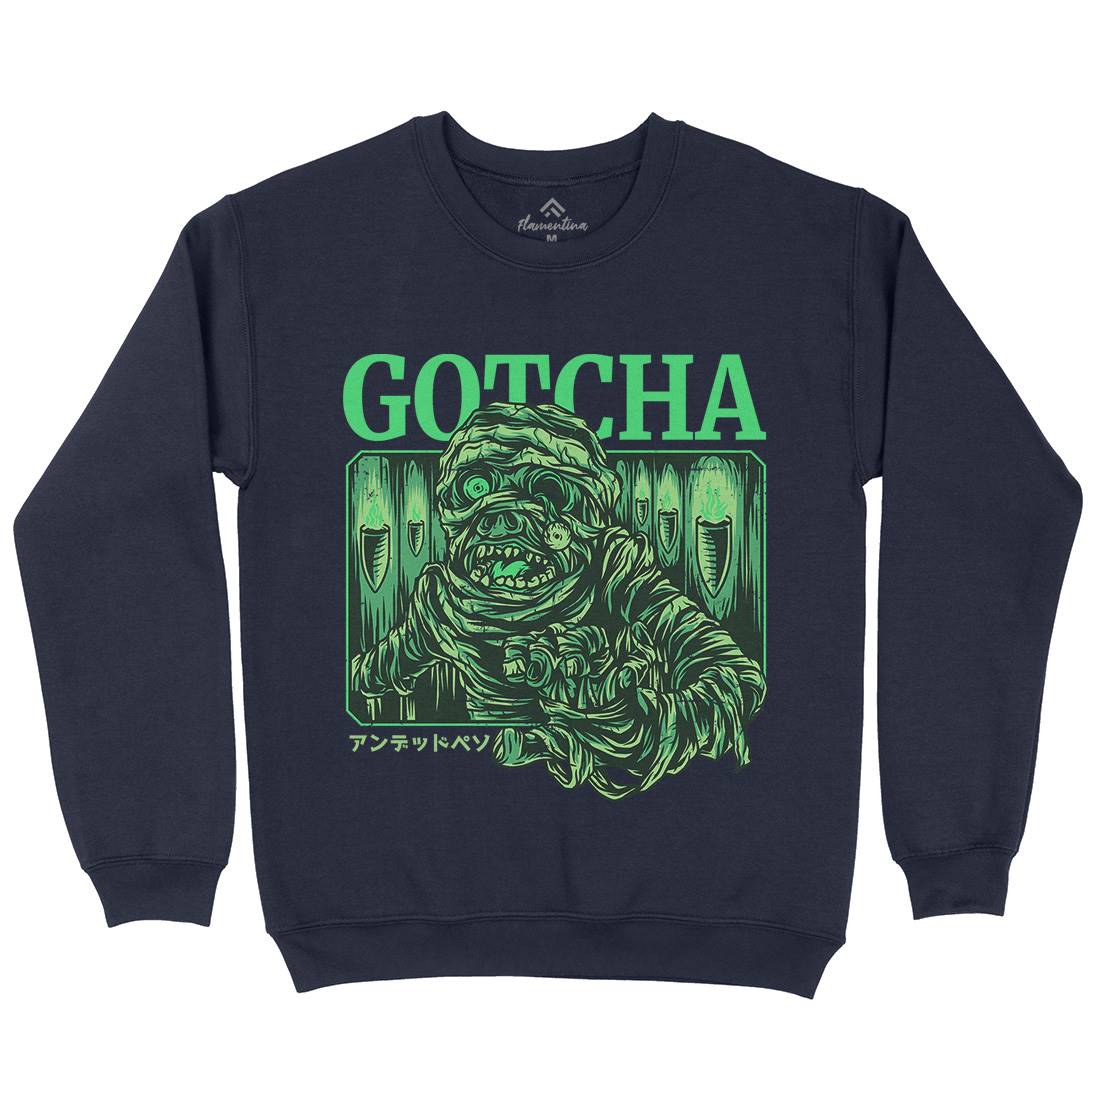 Gotcha Kids Crew Neck Sweatshirt Horror D799